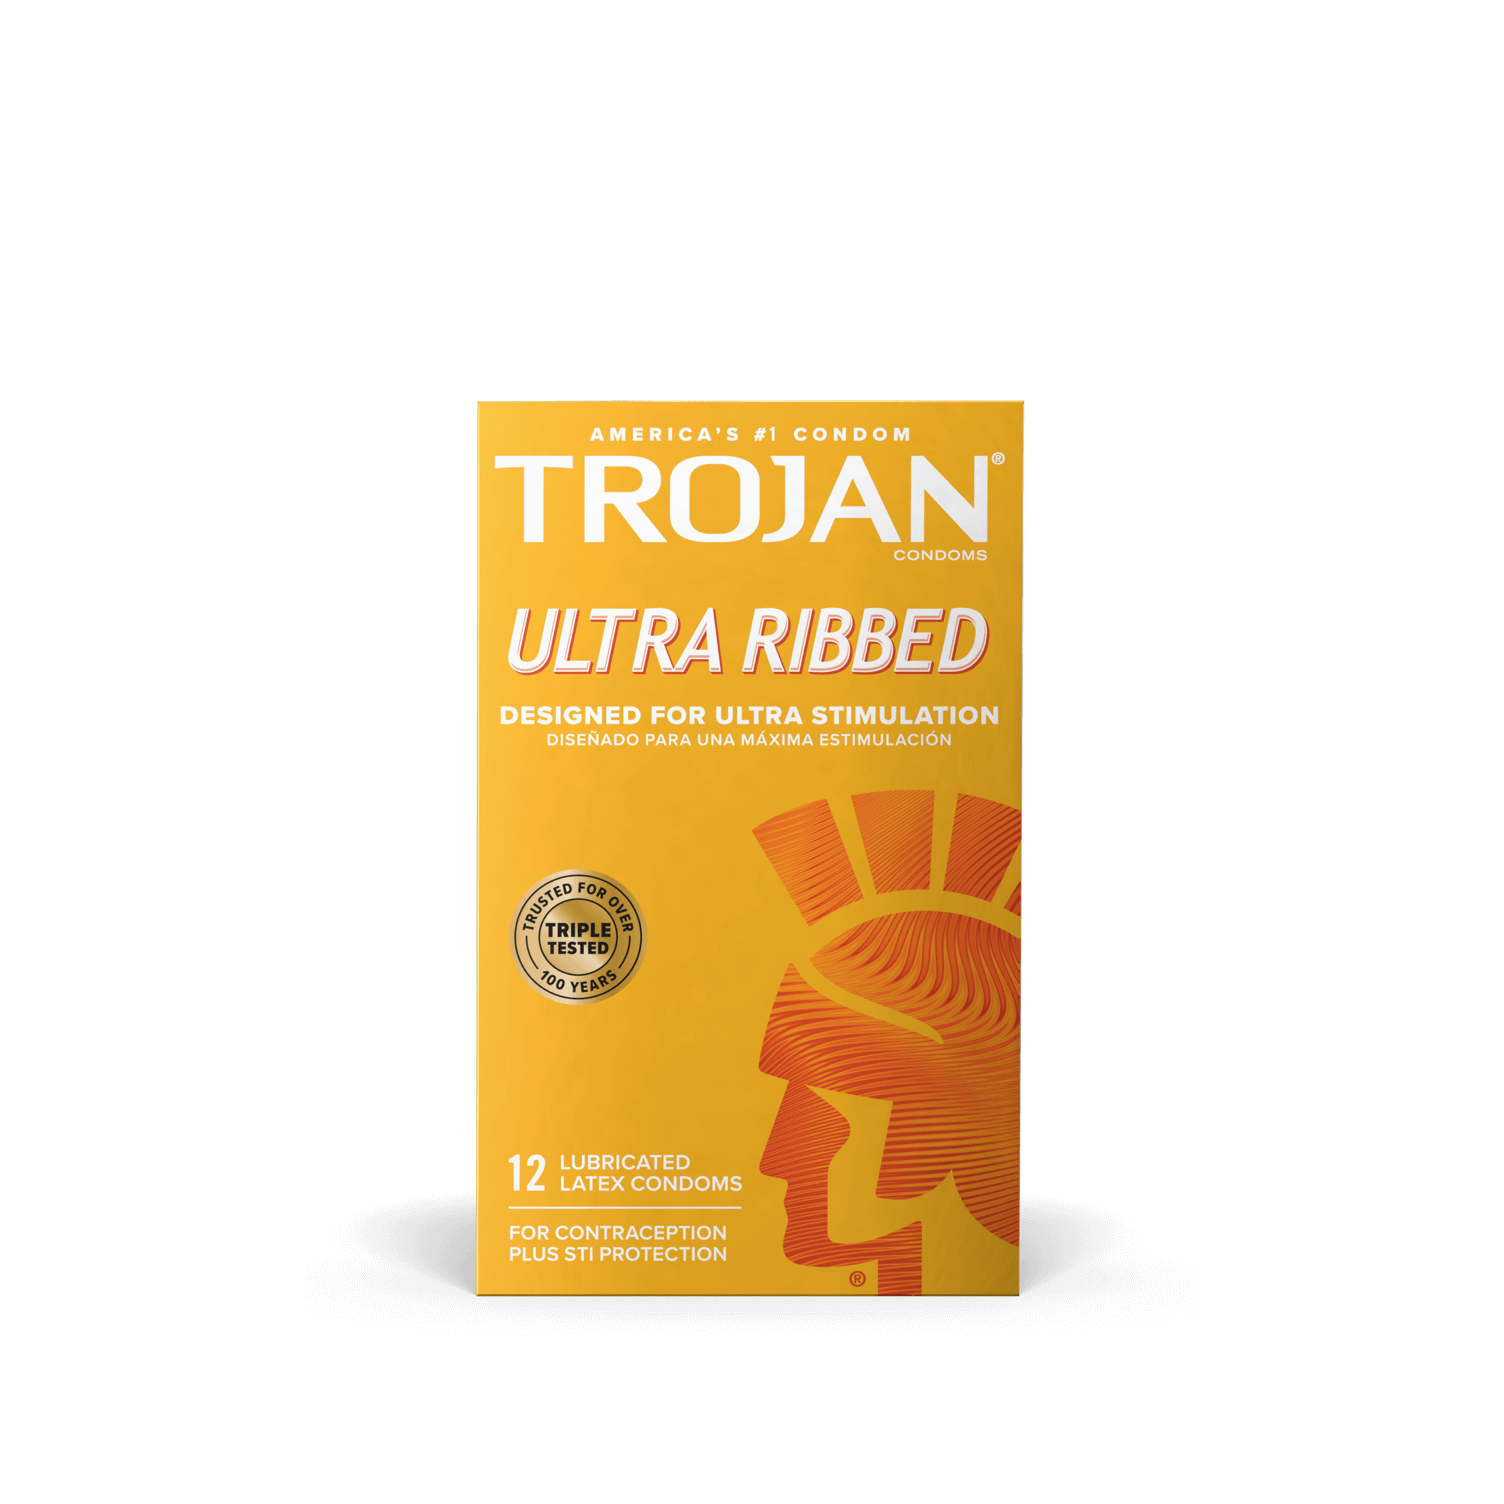 Trojans condom is what smallest 10 Best